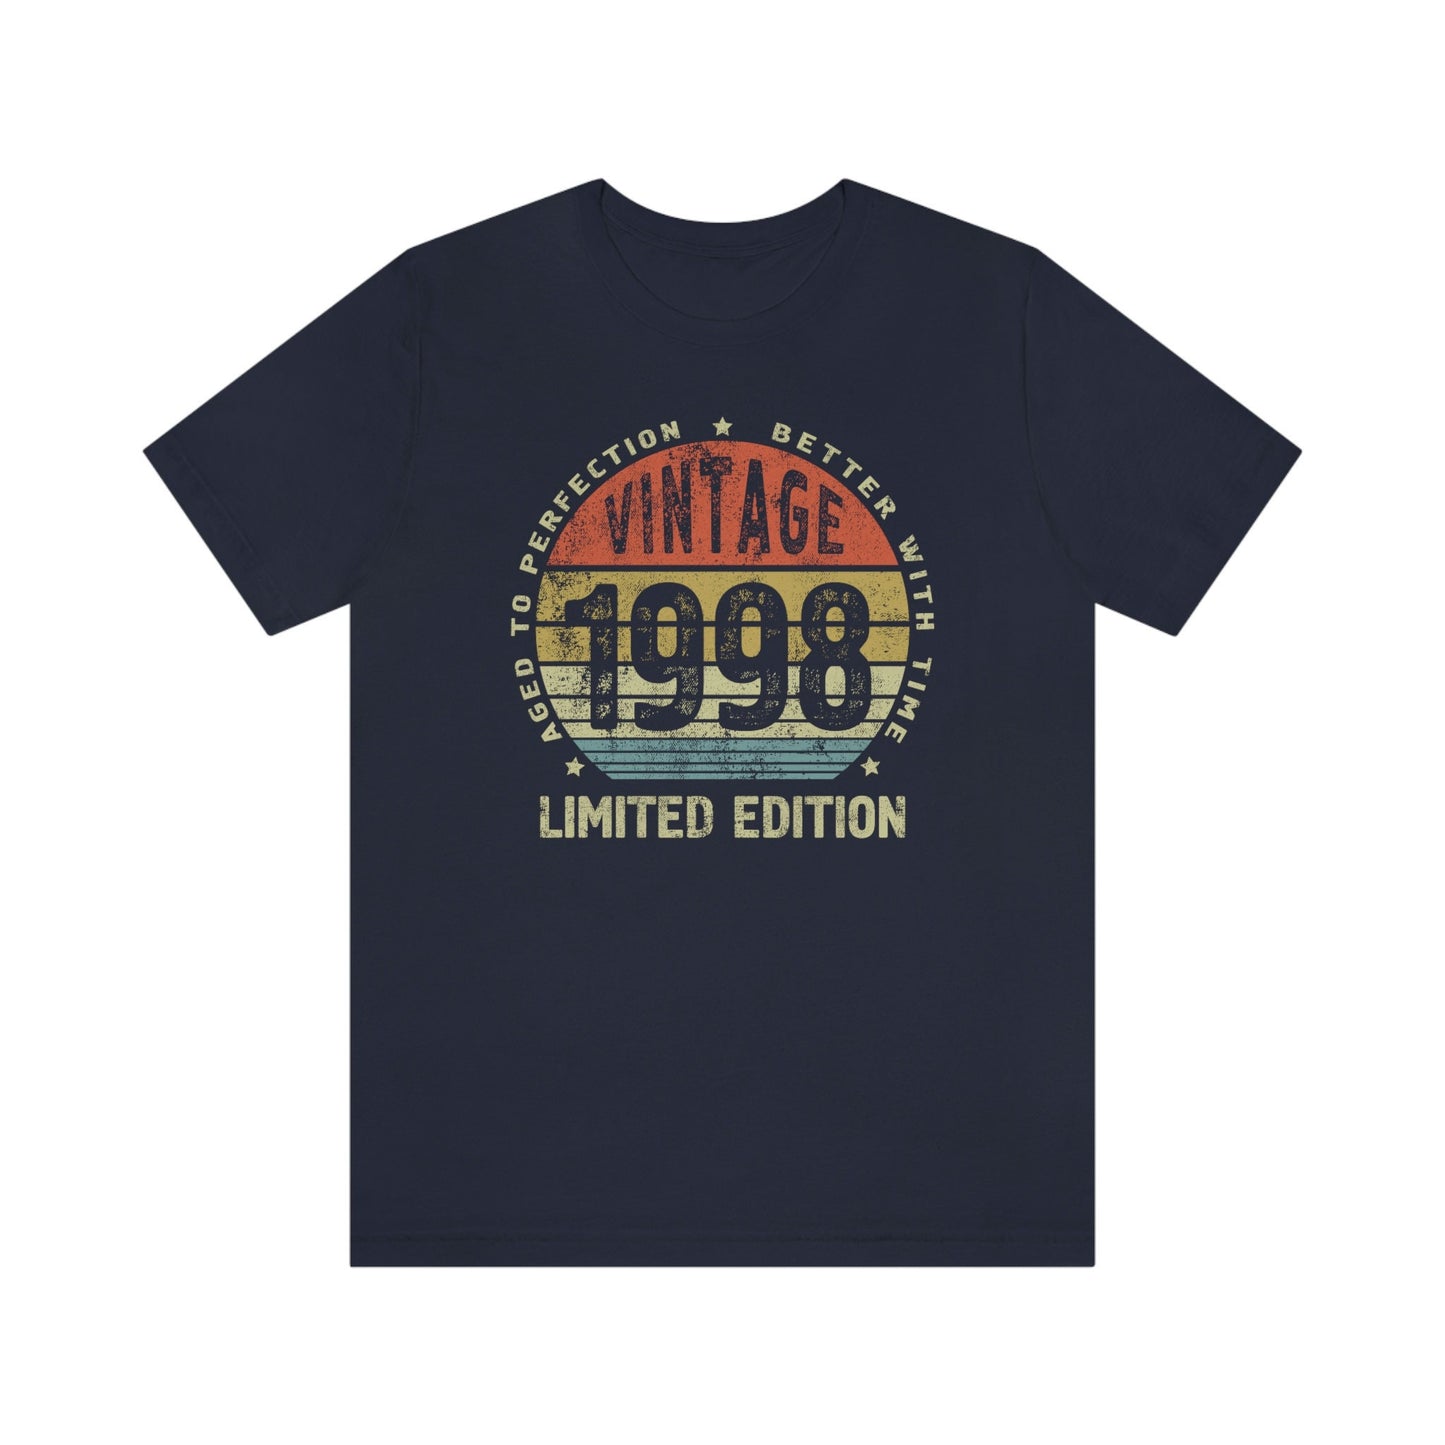 25th birthday gift t-shirt for women or men, Vintage 1998 birthday shirt